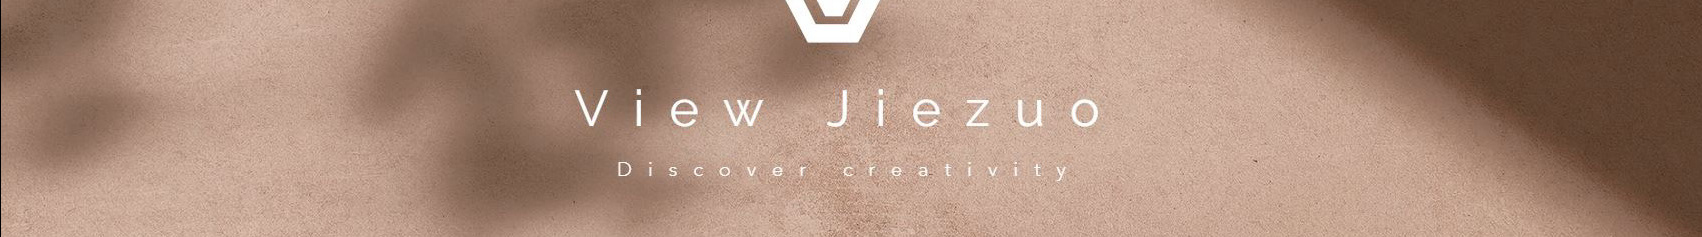 V J's profile banner